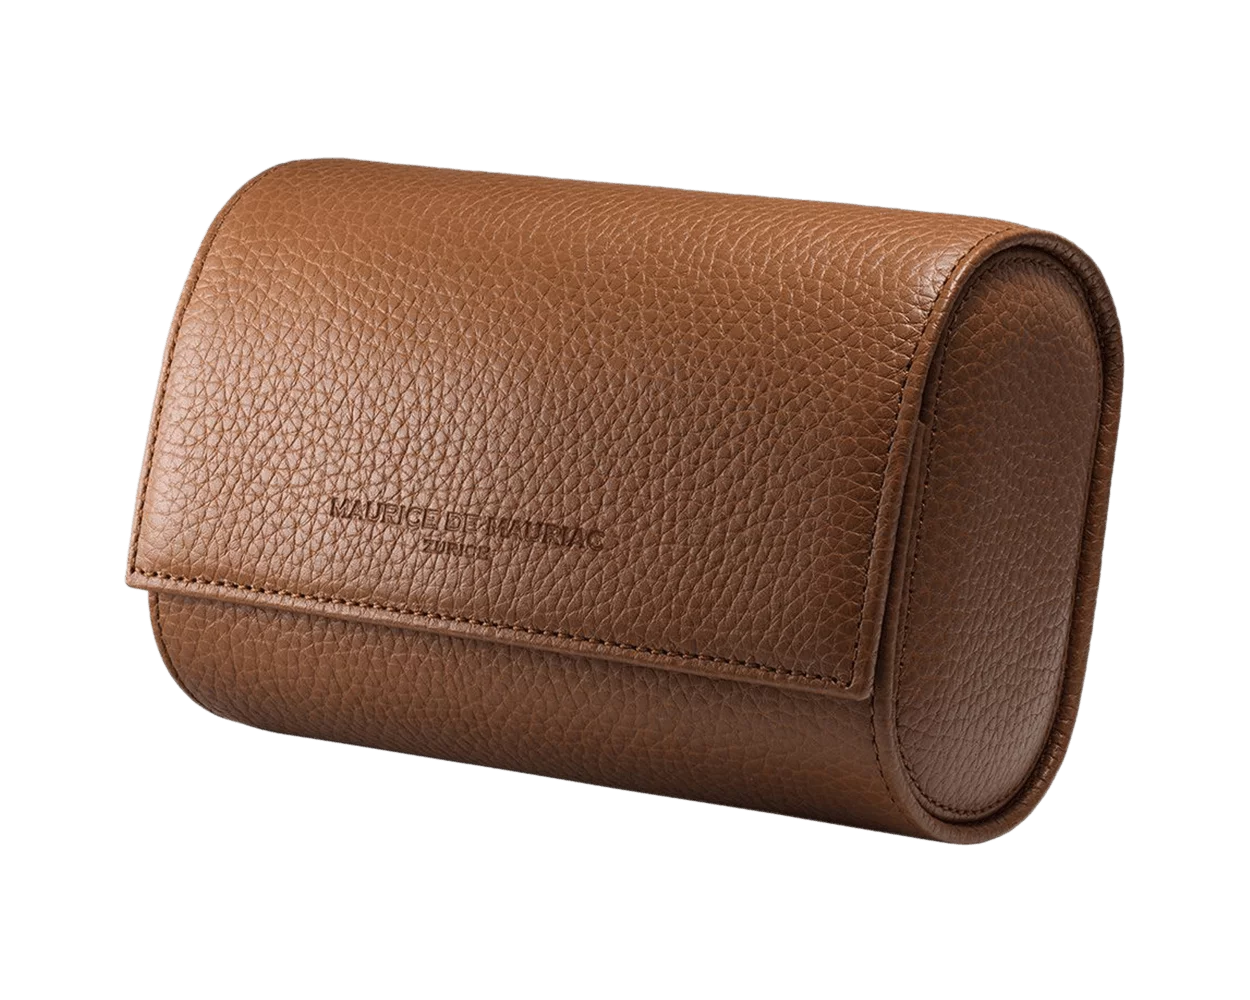 Oval Leather Travel Case (Honey)